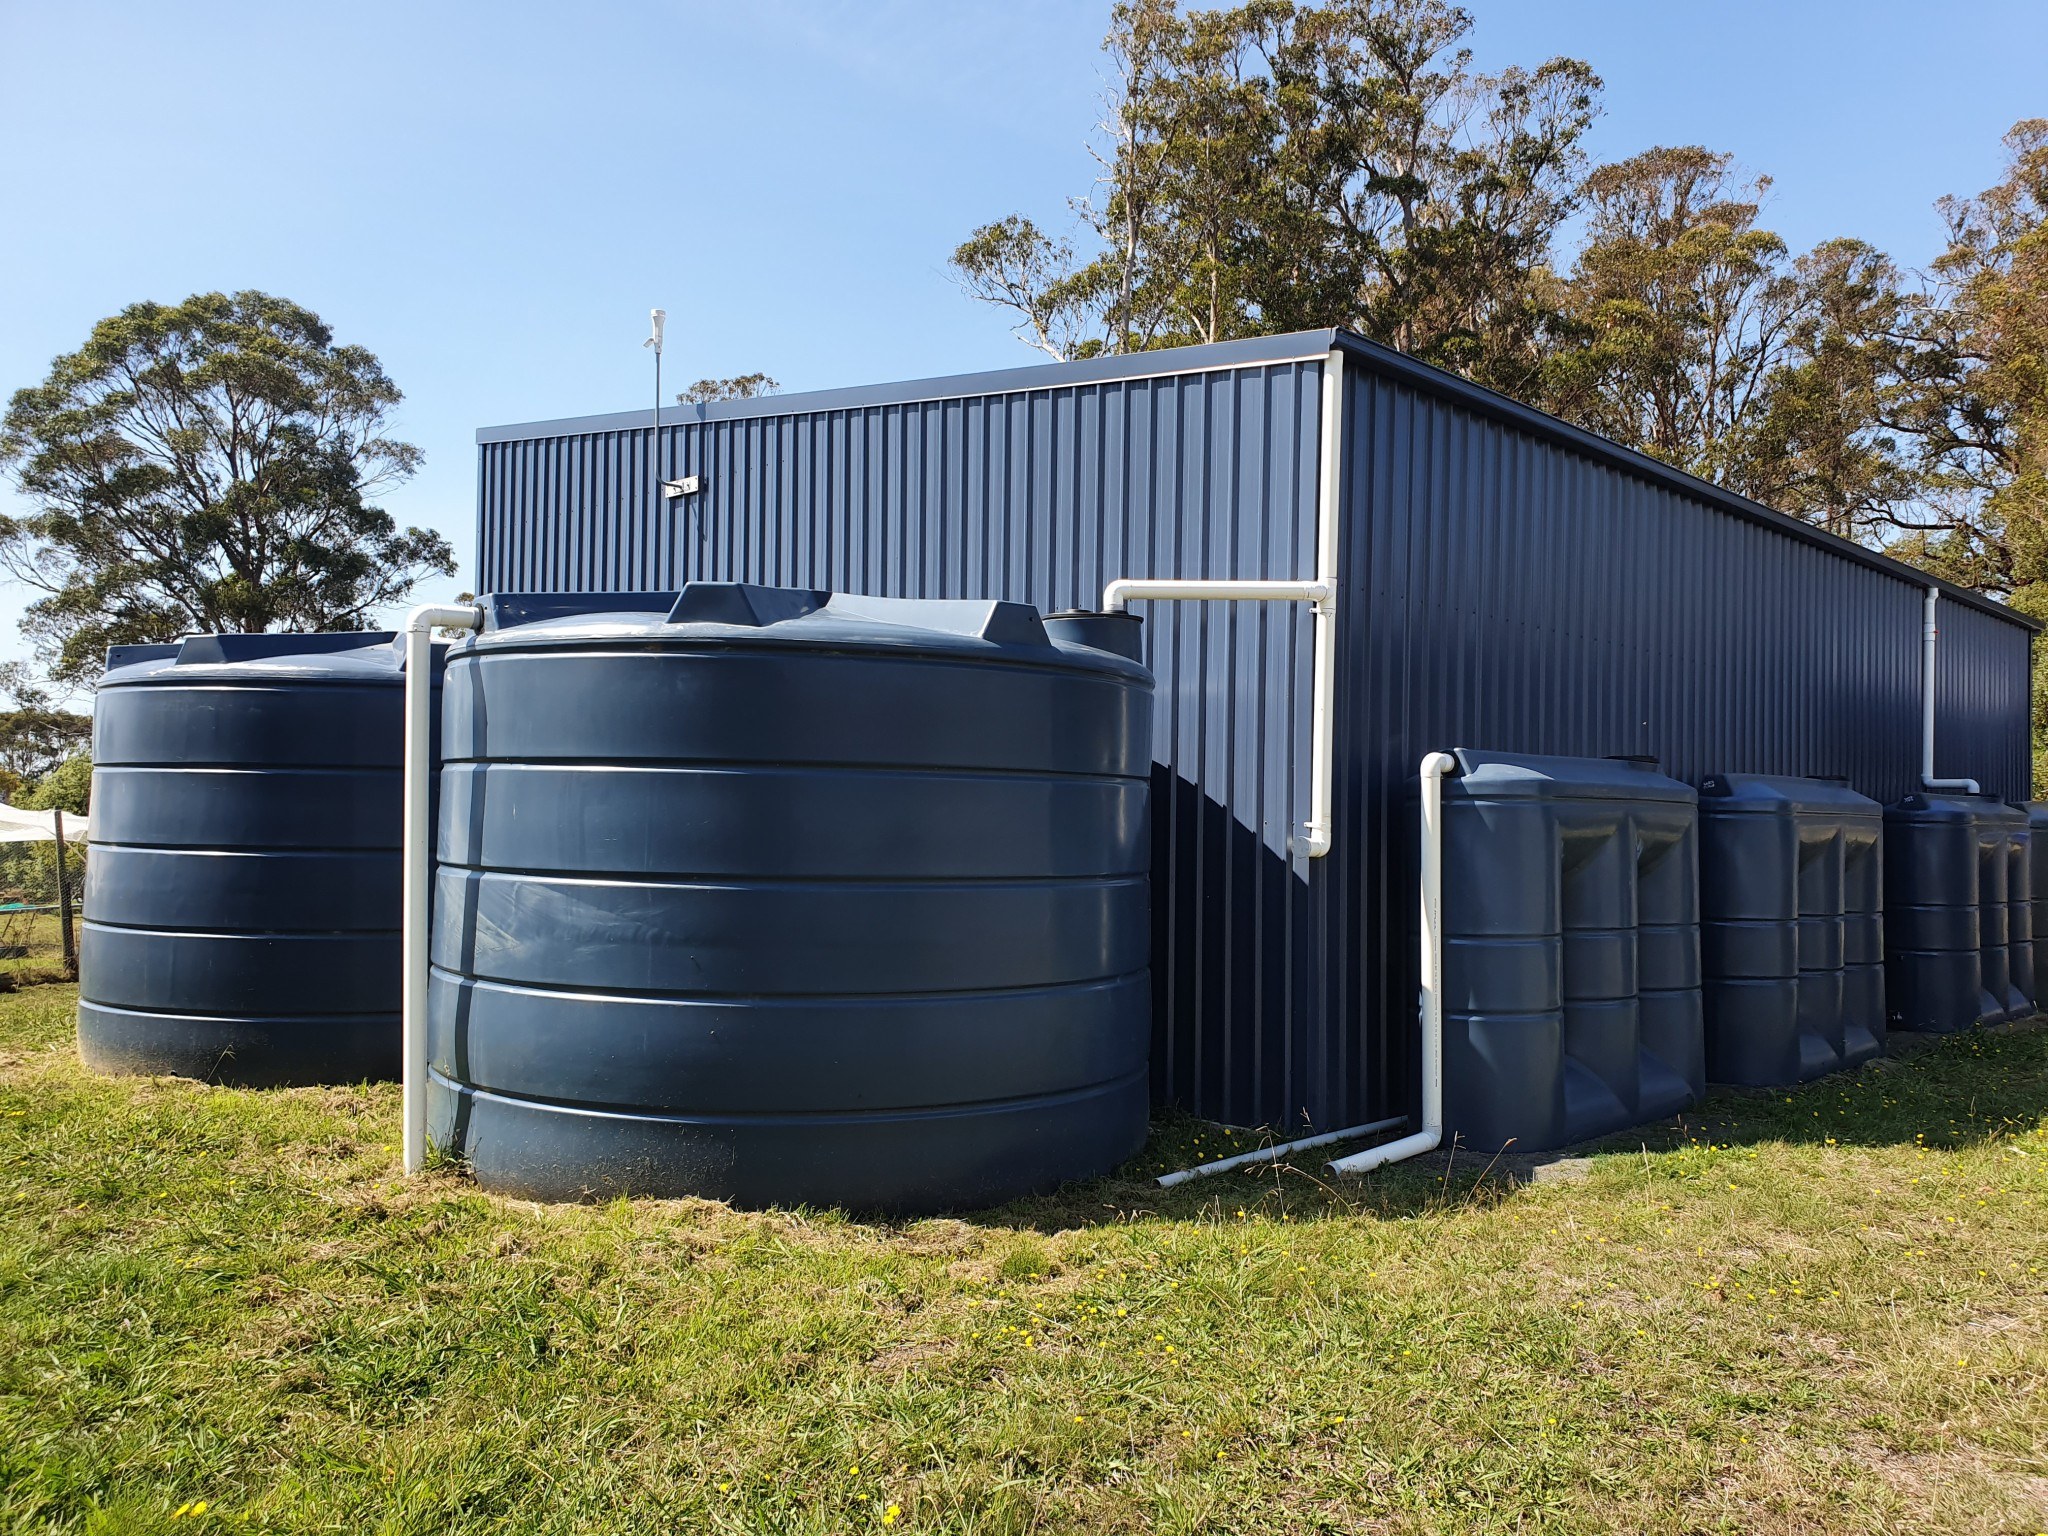 Large scale rainwater tanks